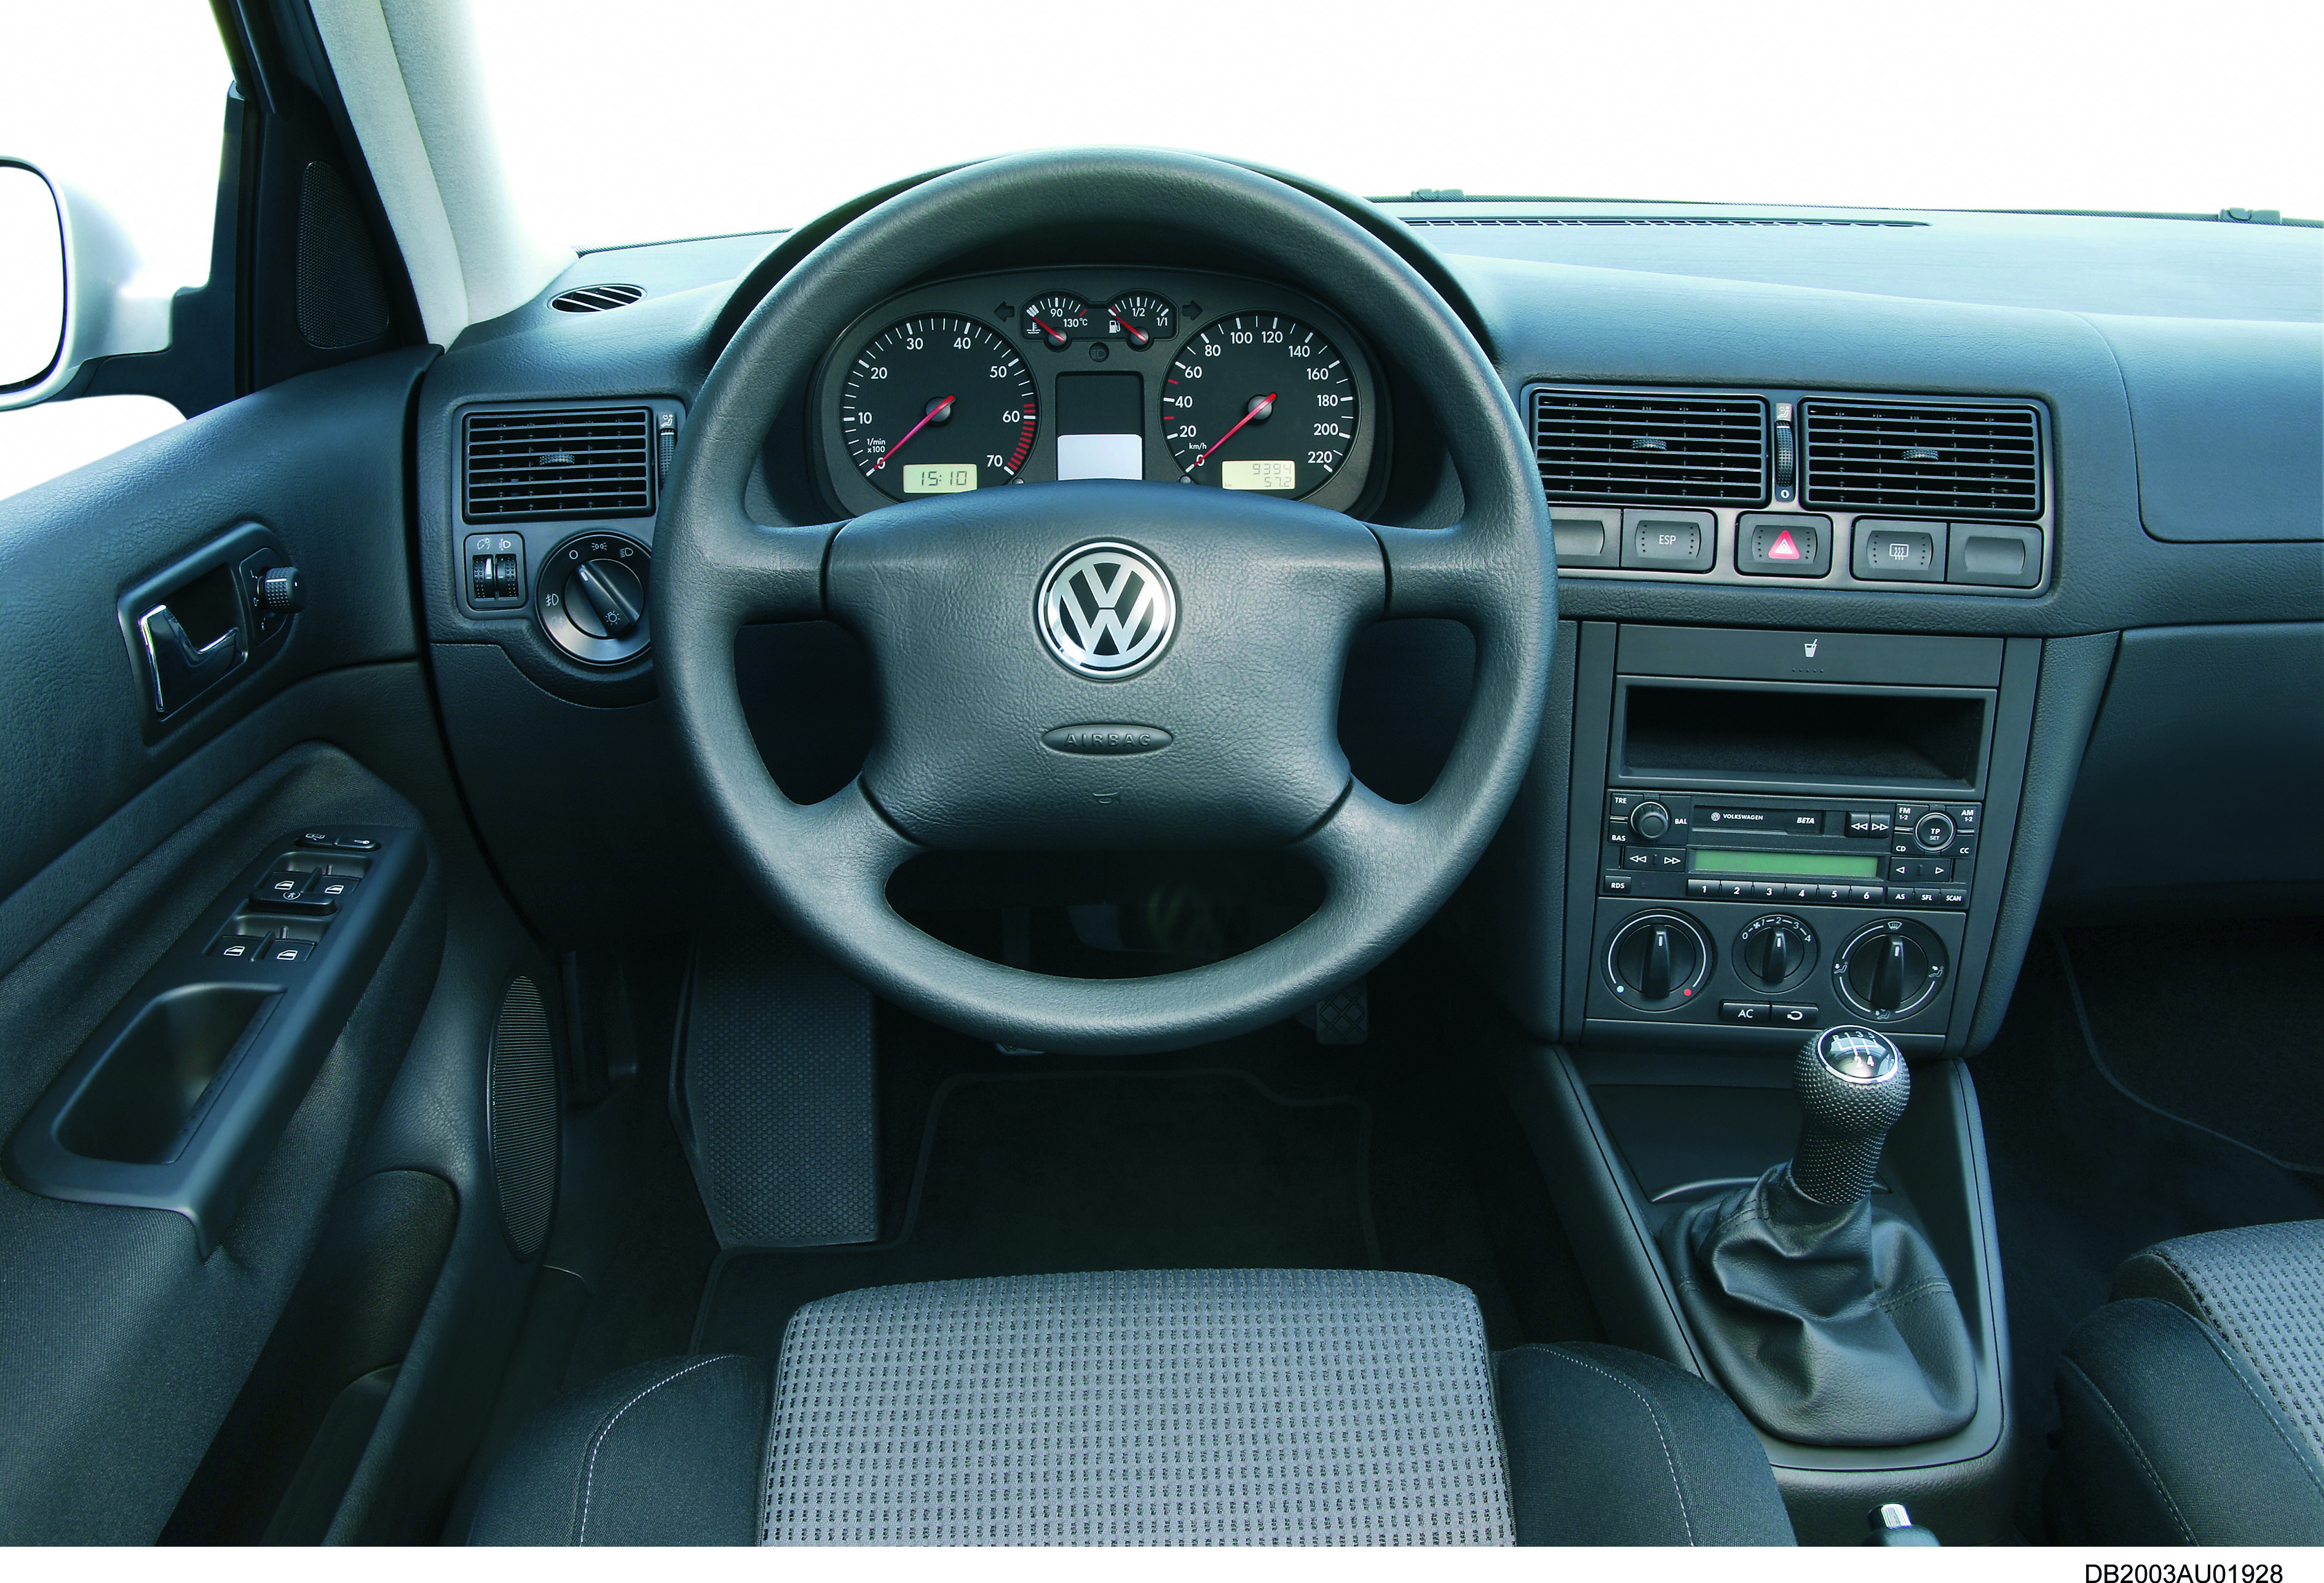 Пассат б5 универсал 1.9 тди. Volkswagen Golf 4 салон. Фольксваген гольф 4 сало. Volkswagen Golf 4 Interior. Volkswagen Golf mk4 салон.